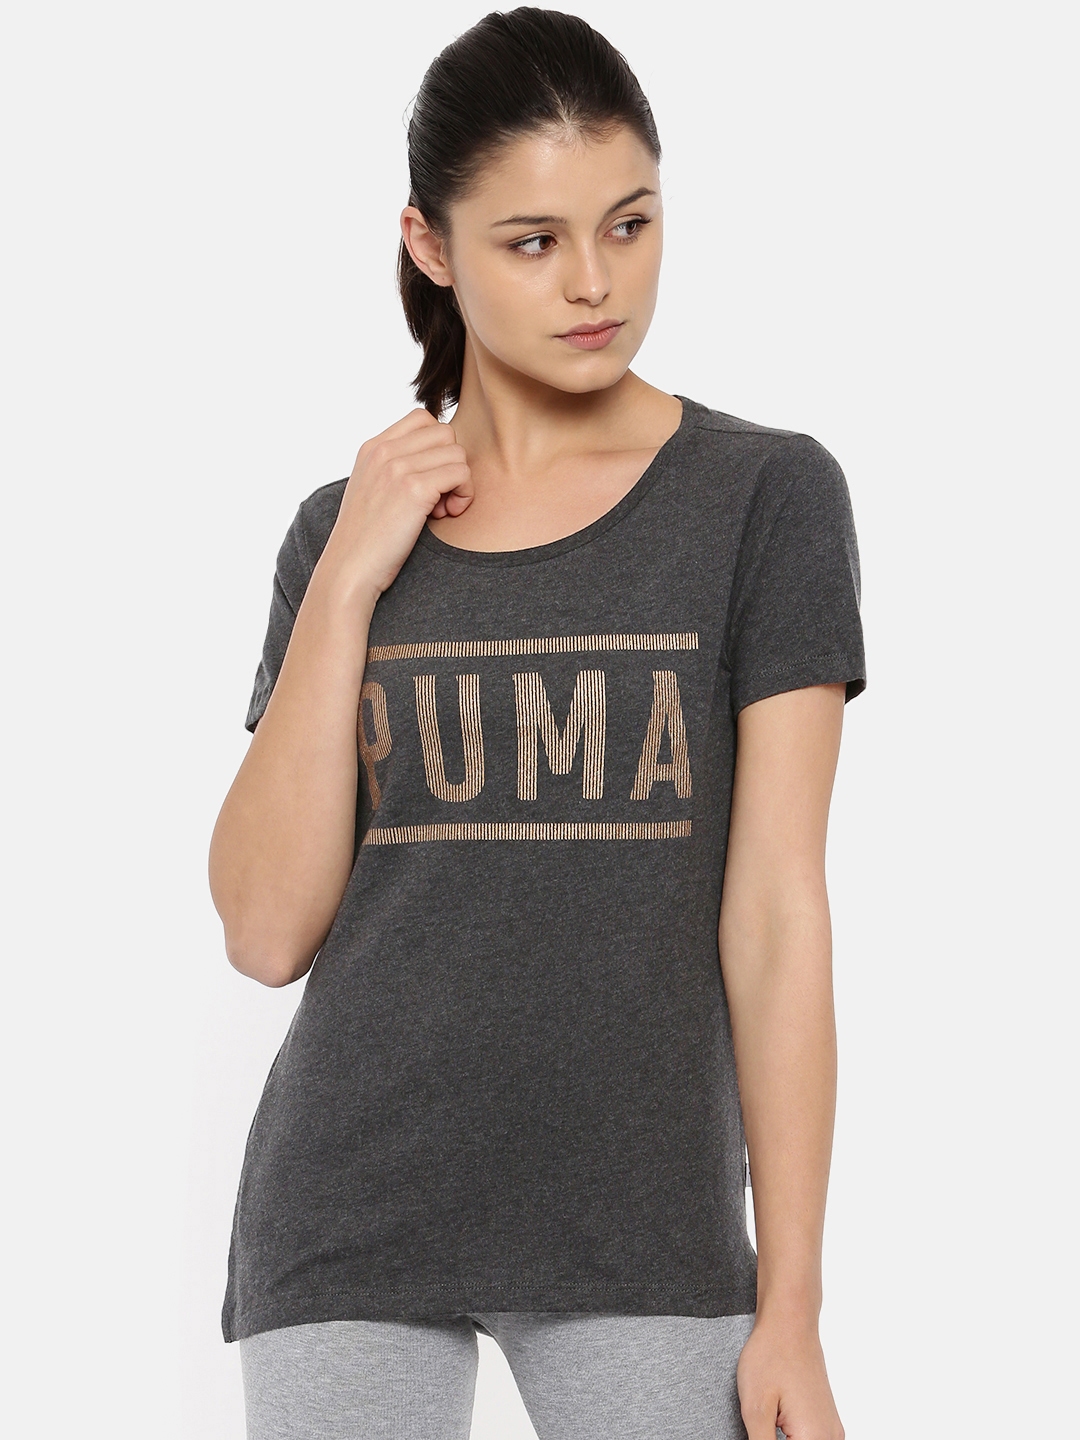 puma shirts womens